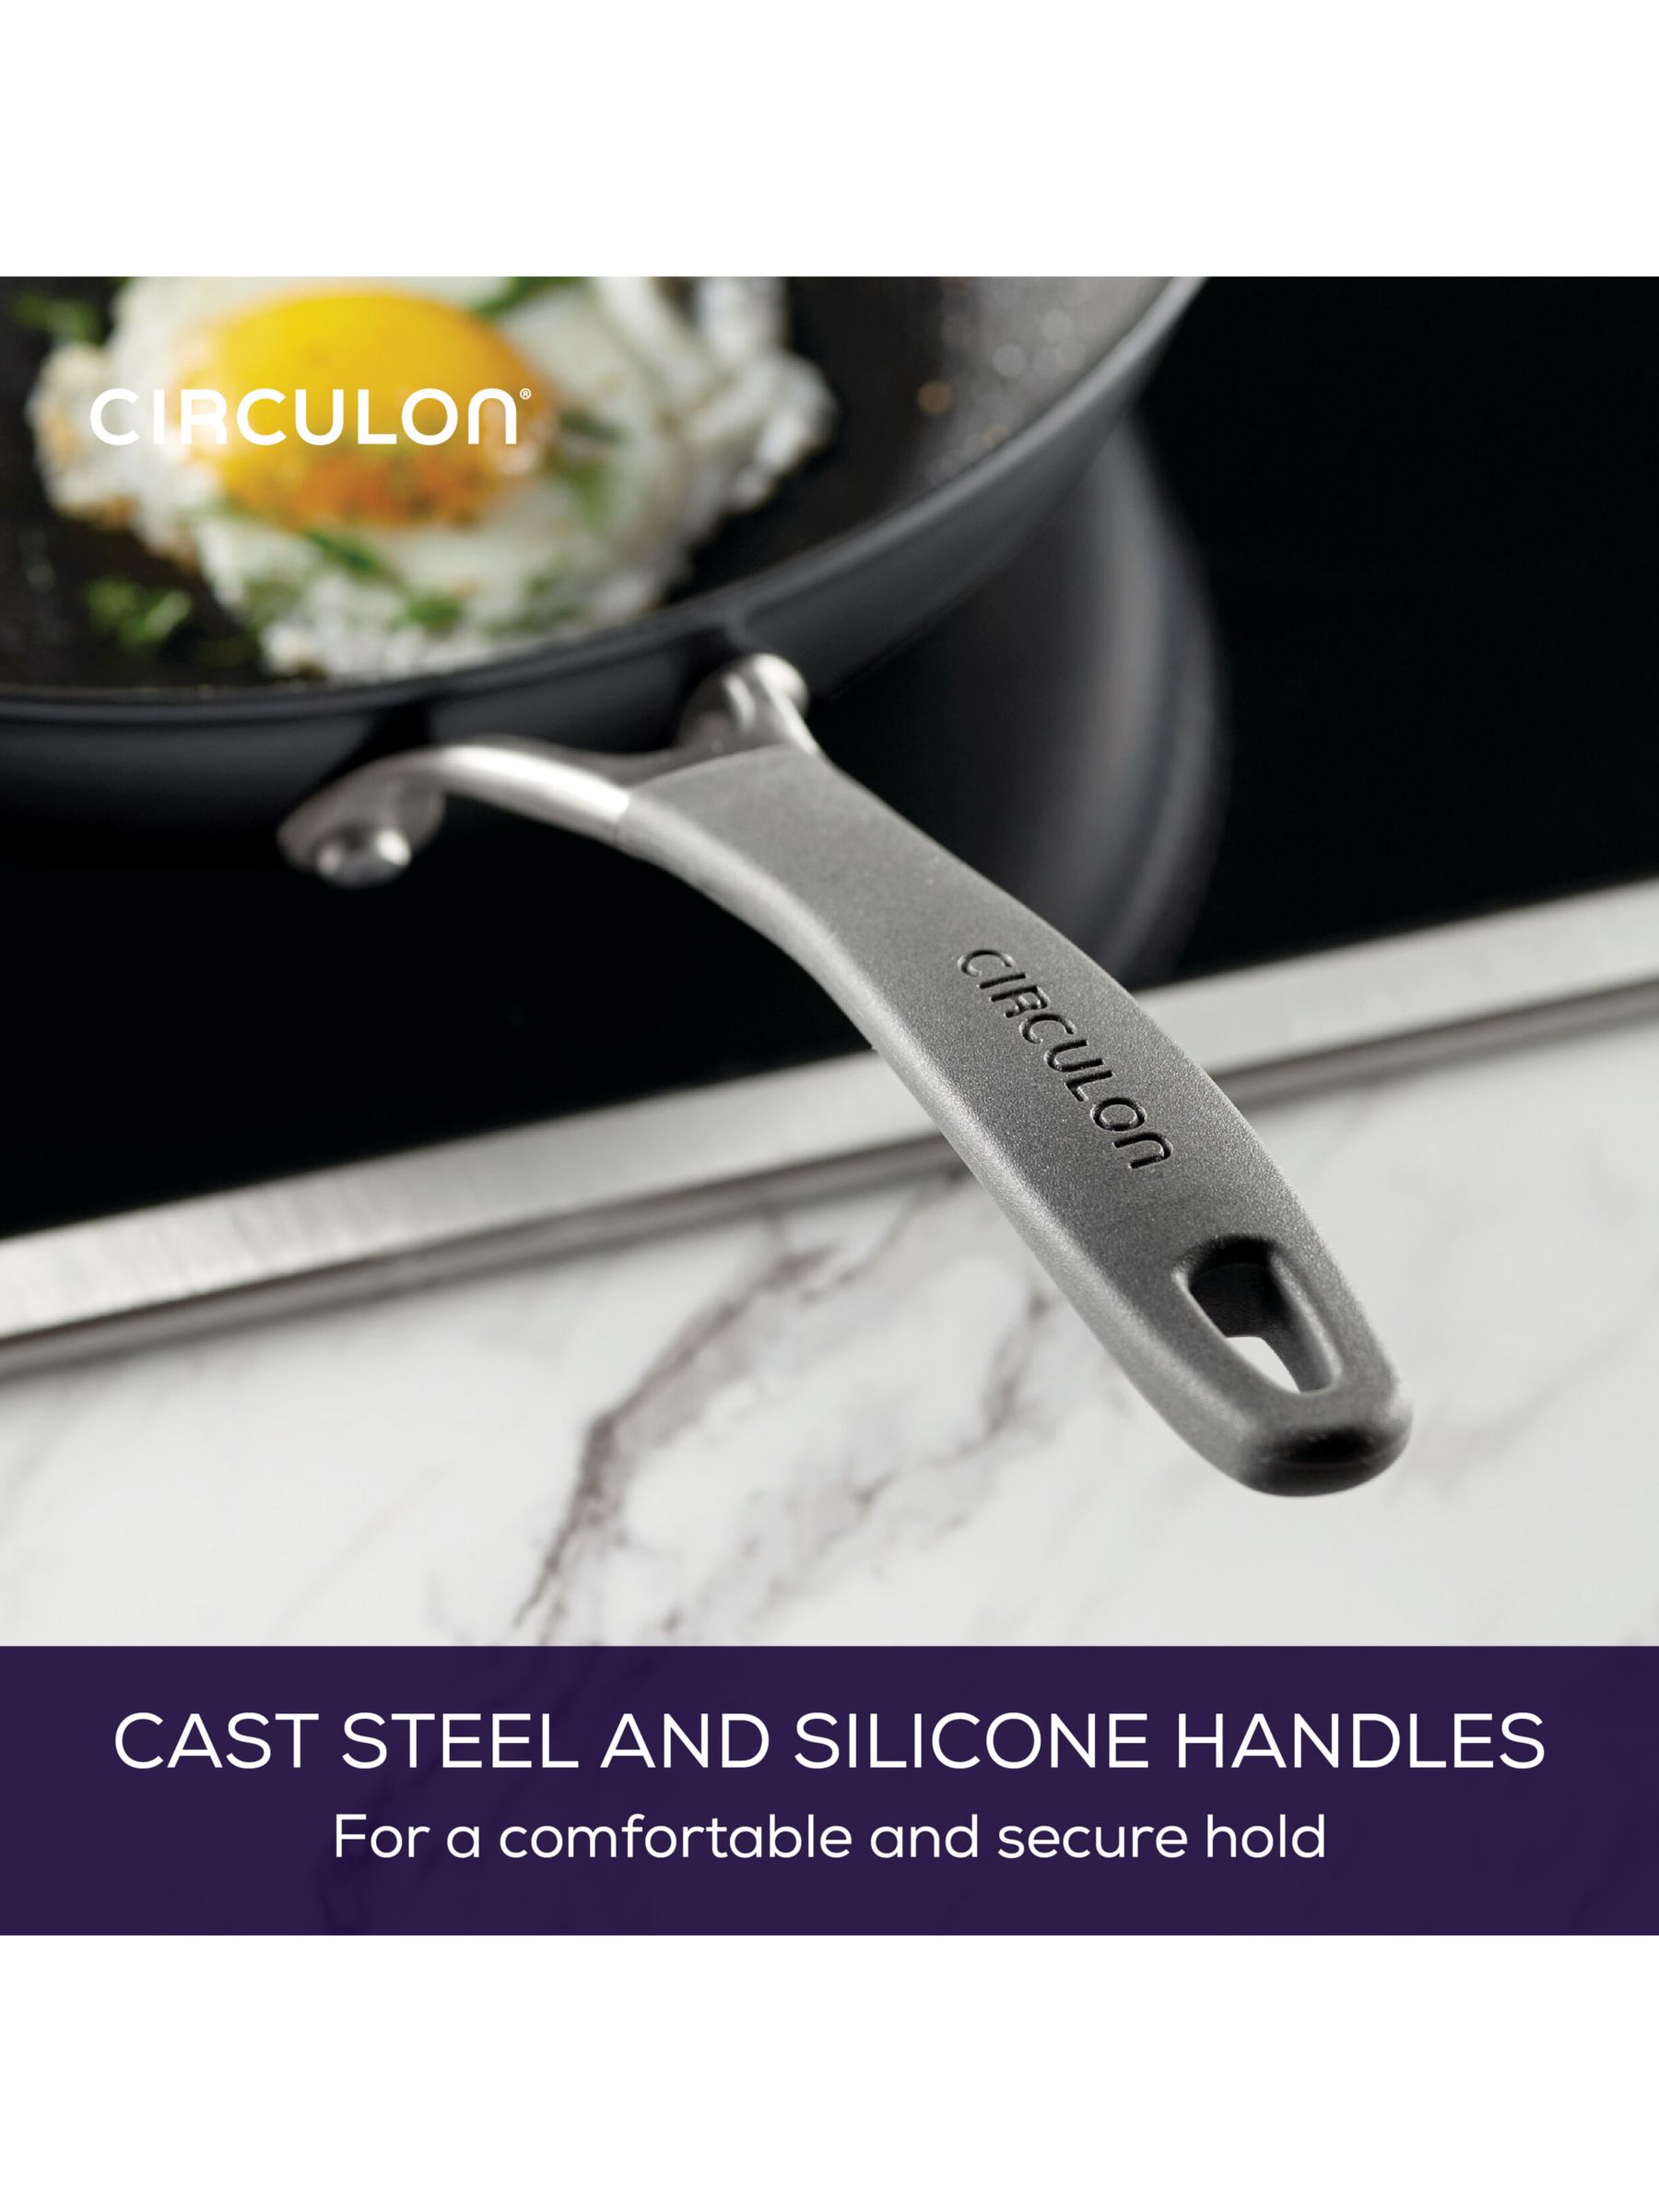 Circulon Aluminium ScratchDefense Non-Stick Wok with Helper Handle, 32cm